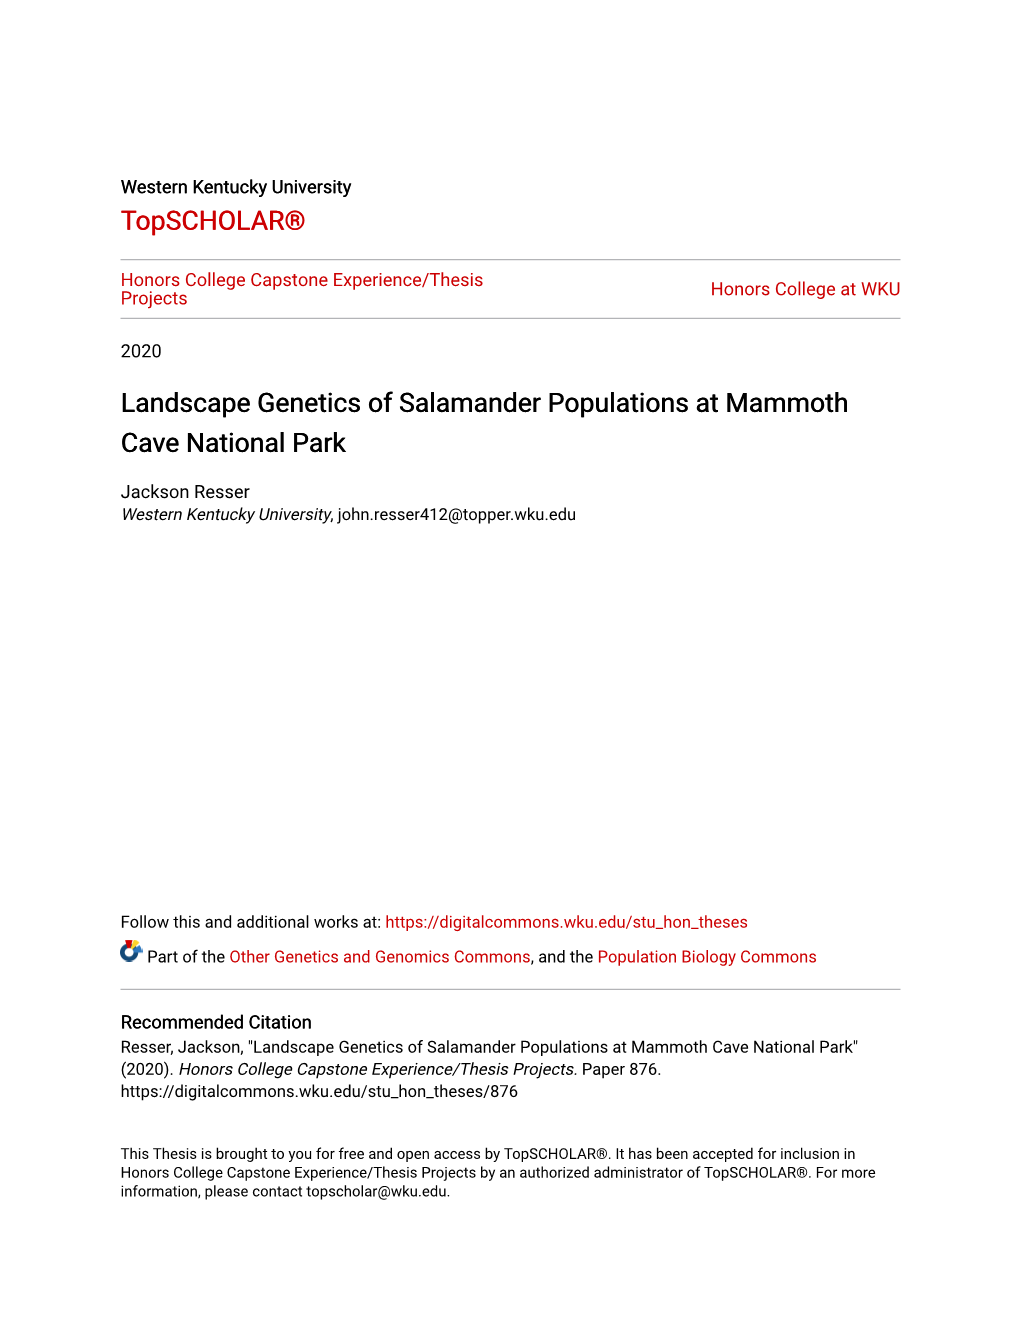 Landscape Genetics of Salamander Populations at Mammoth Cave National Park